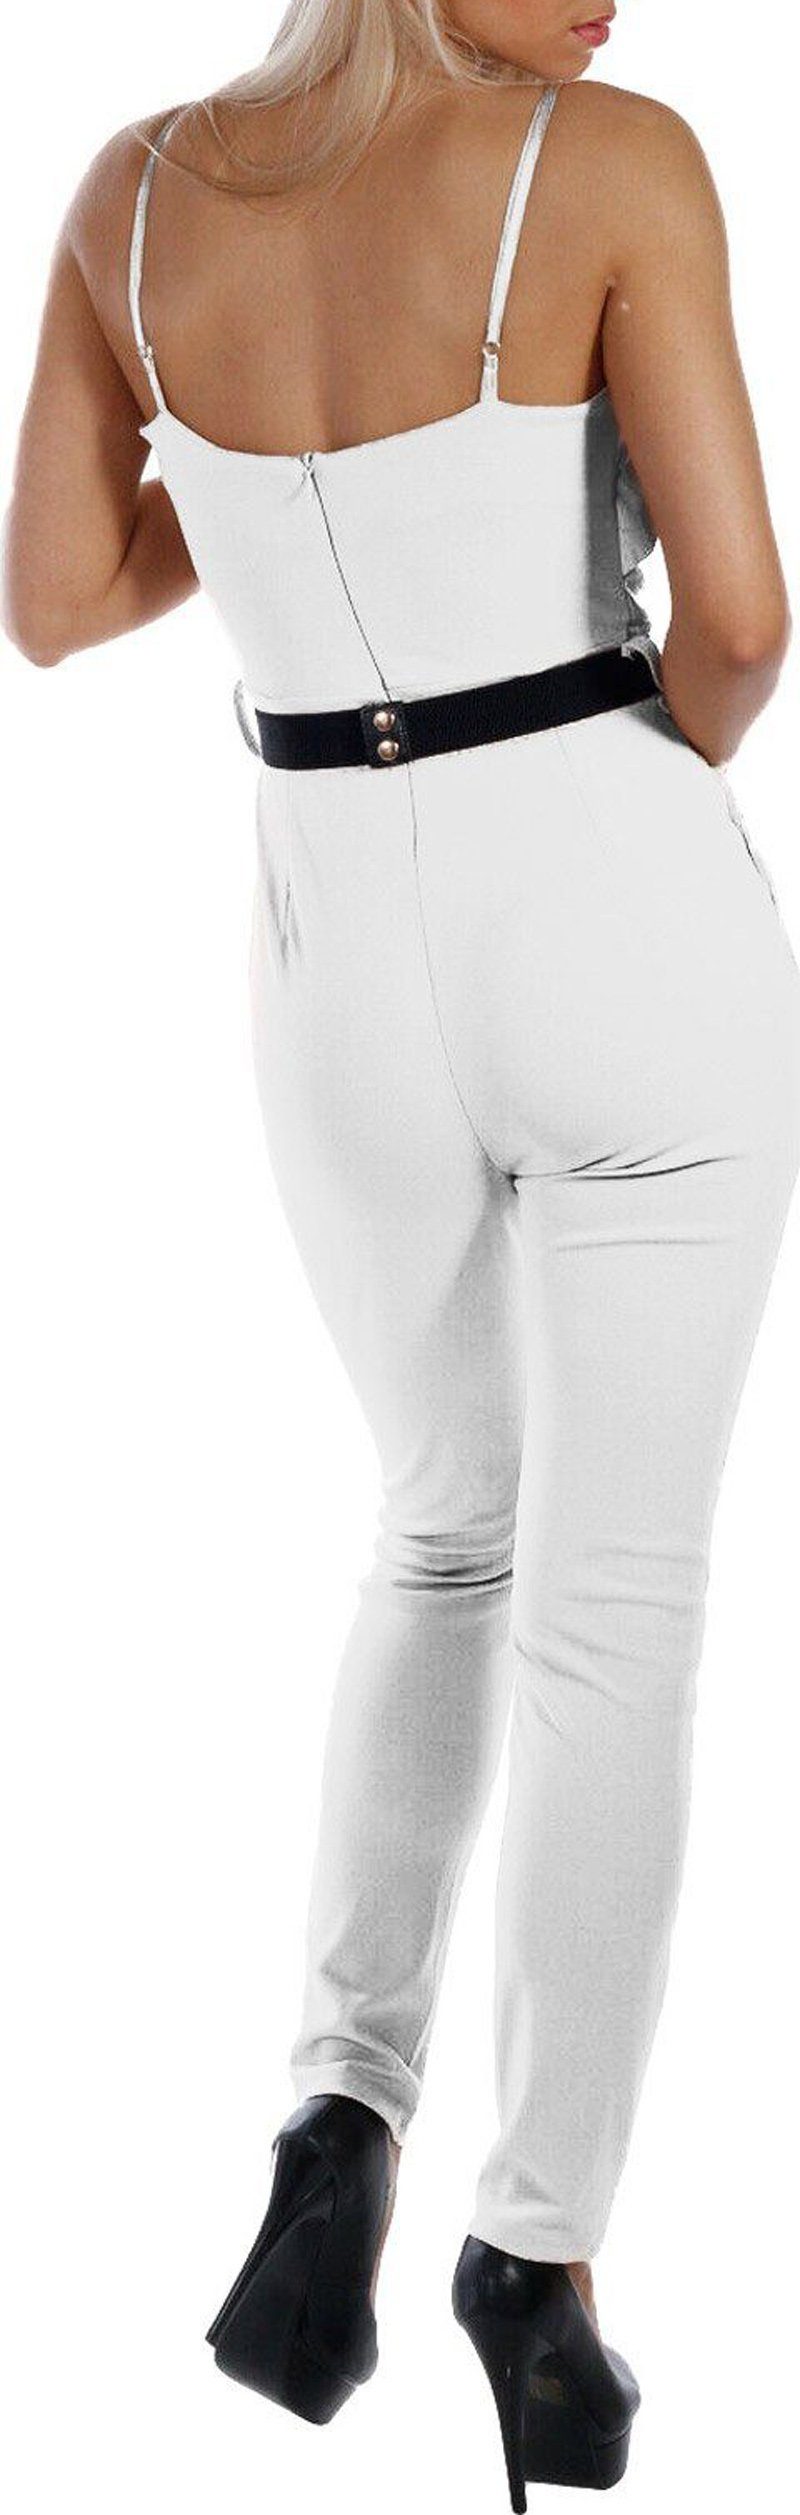 lang mit unifarben Overall Weiß Charis verstellbaren Moda Jumpsuit Spaghettiträgern